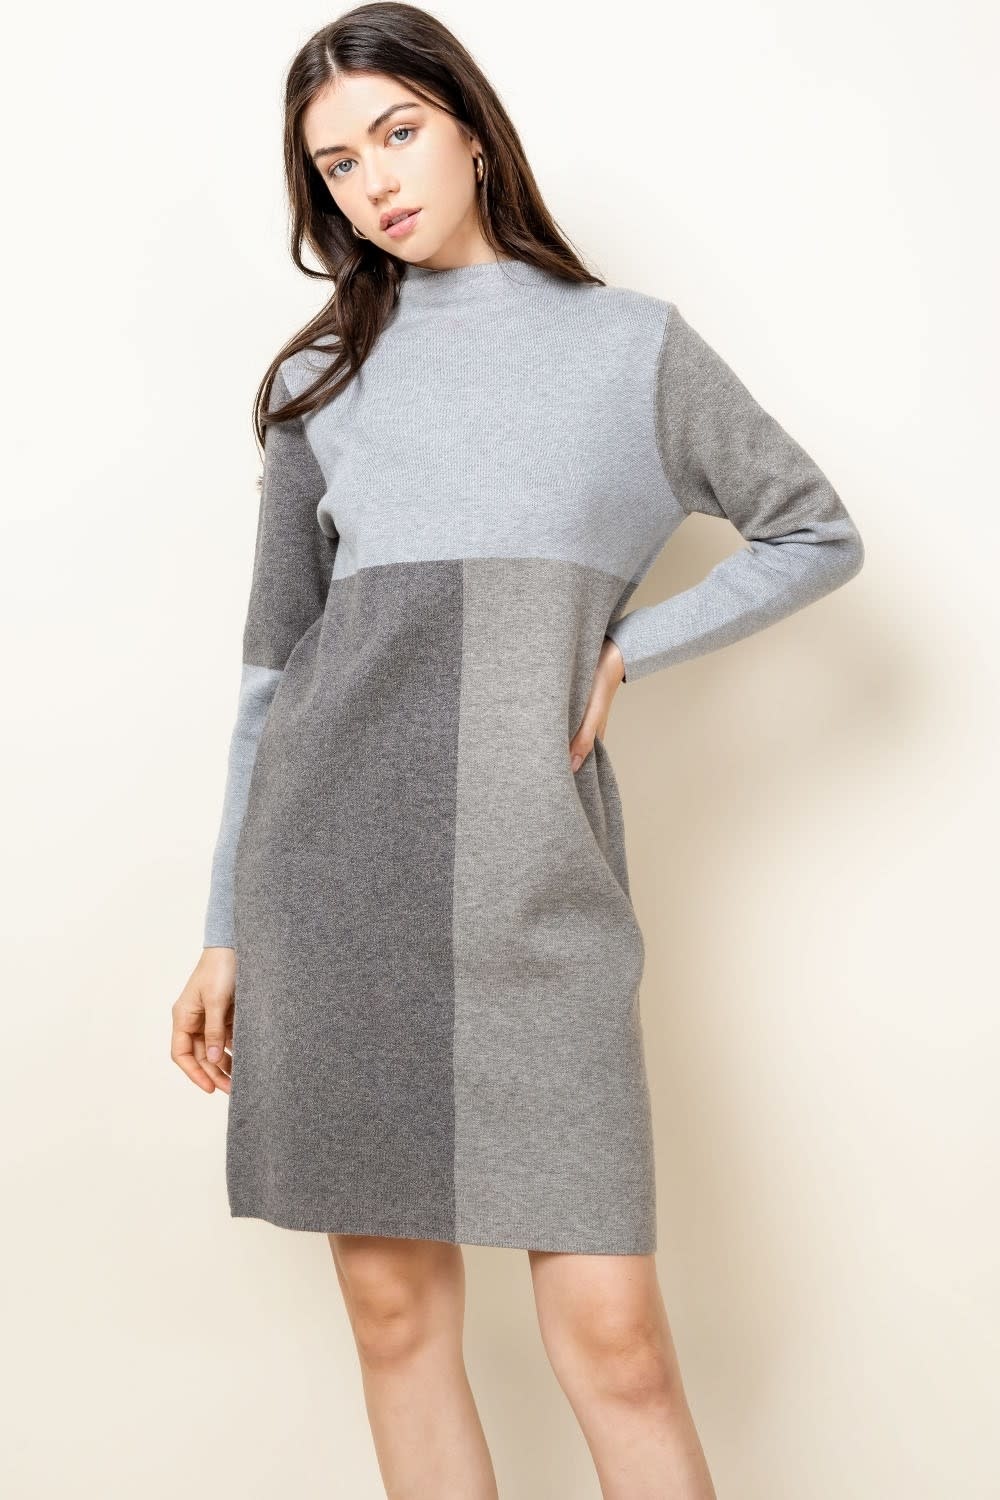 thml sweater dress